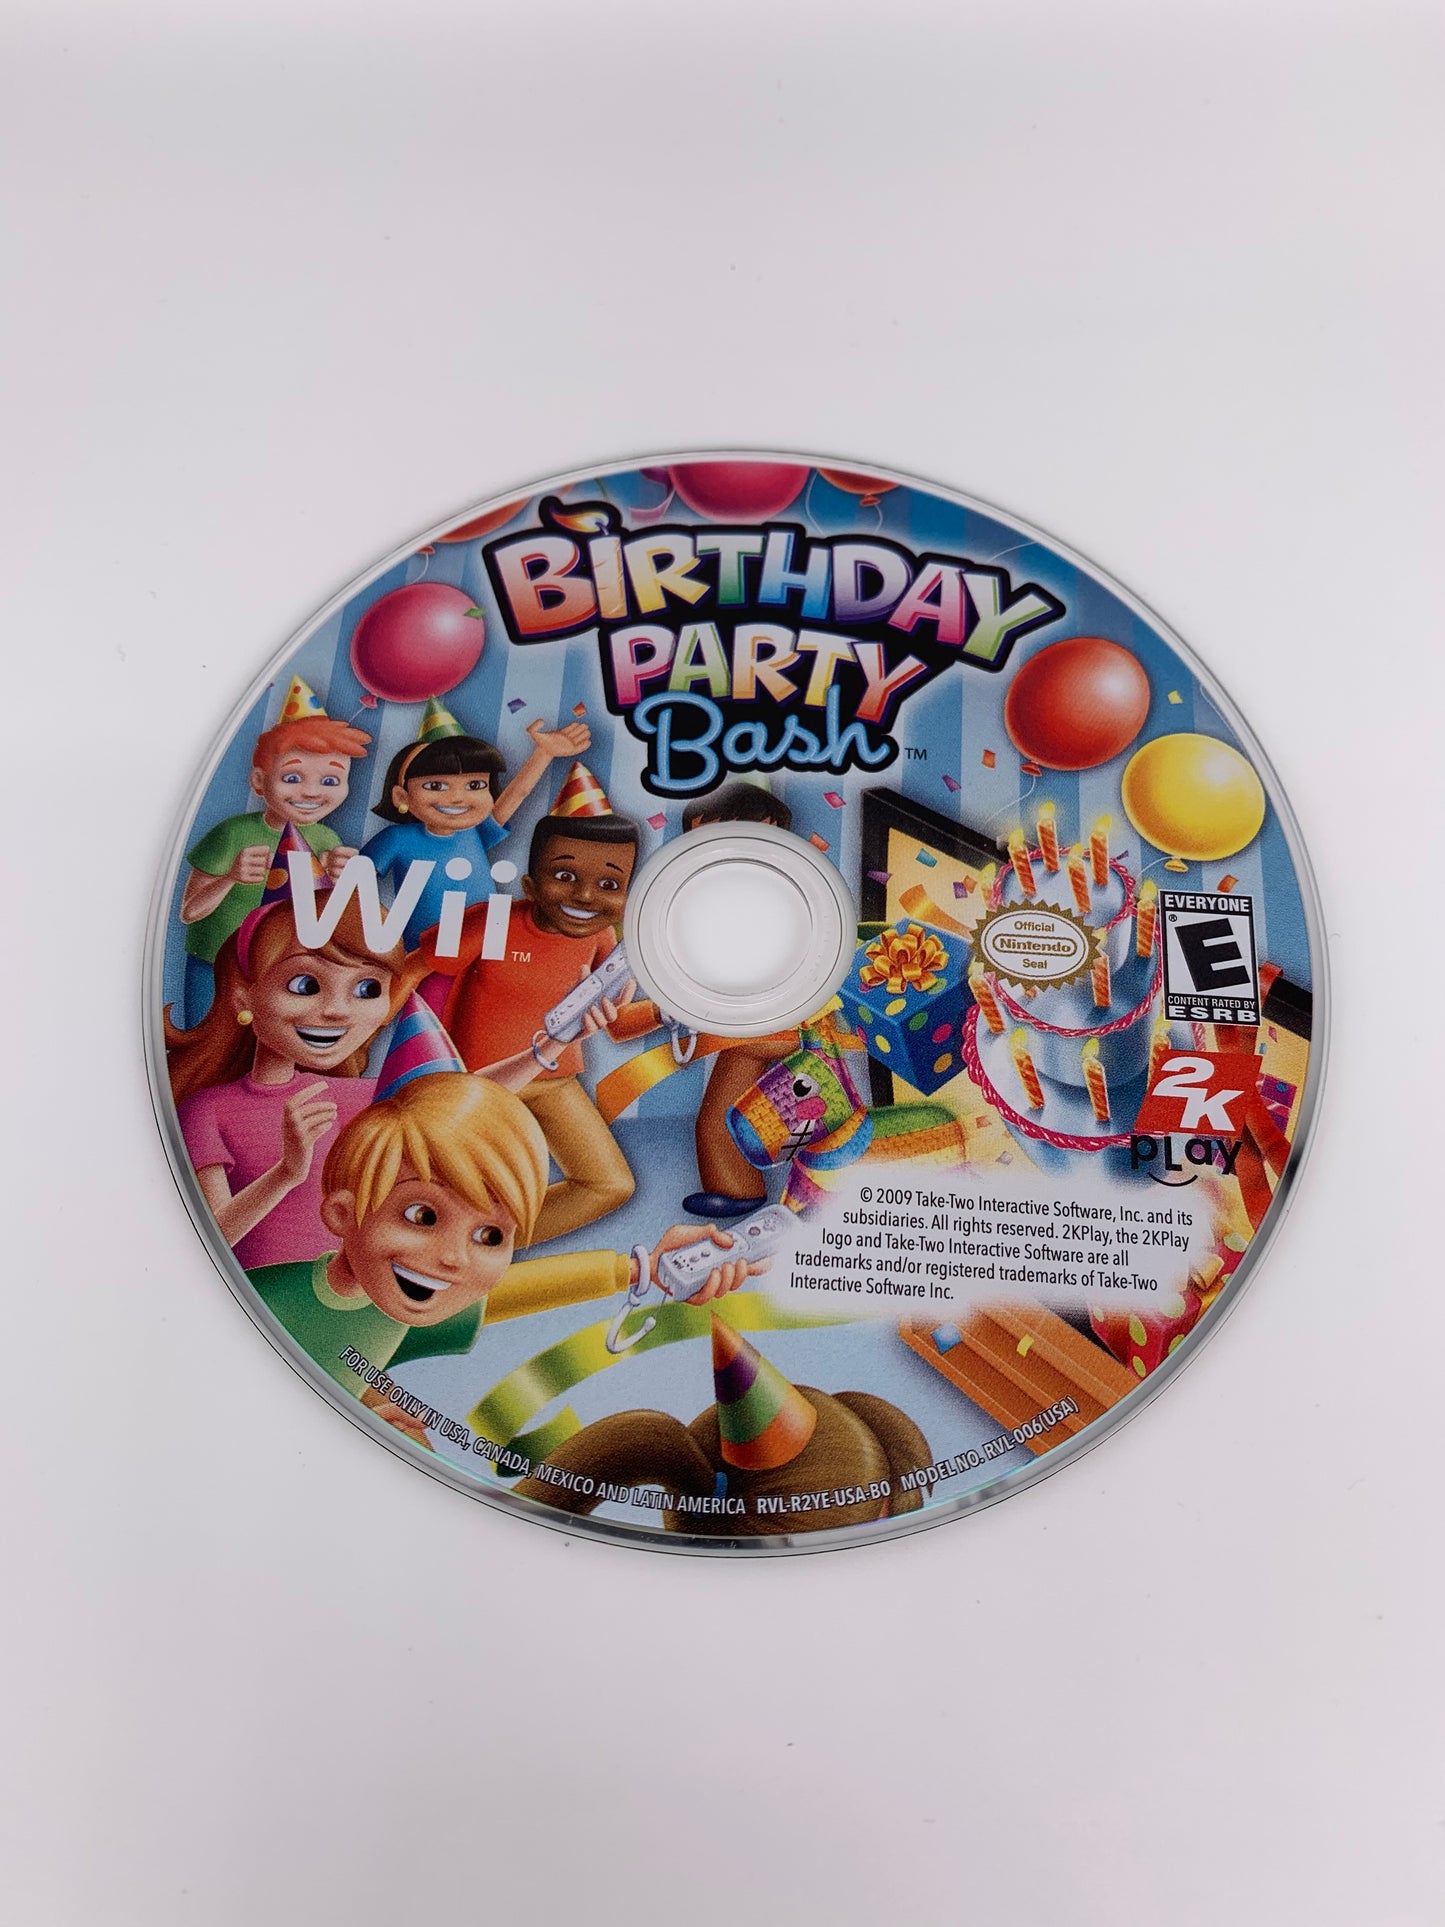 NiNTENDO Wii | BiRTHDAY PARTY BASH